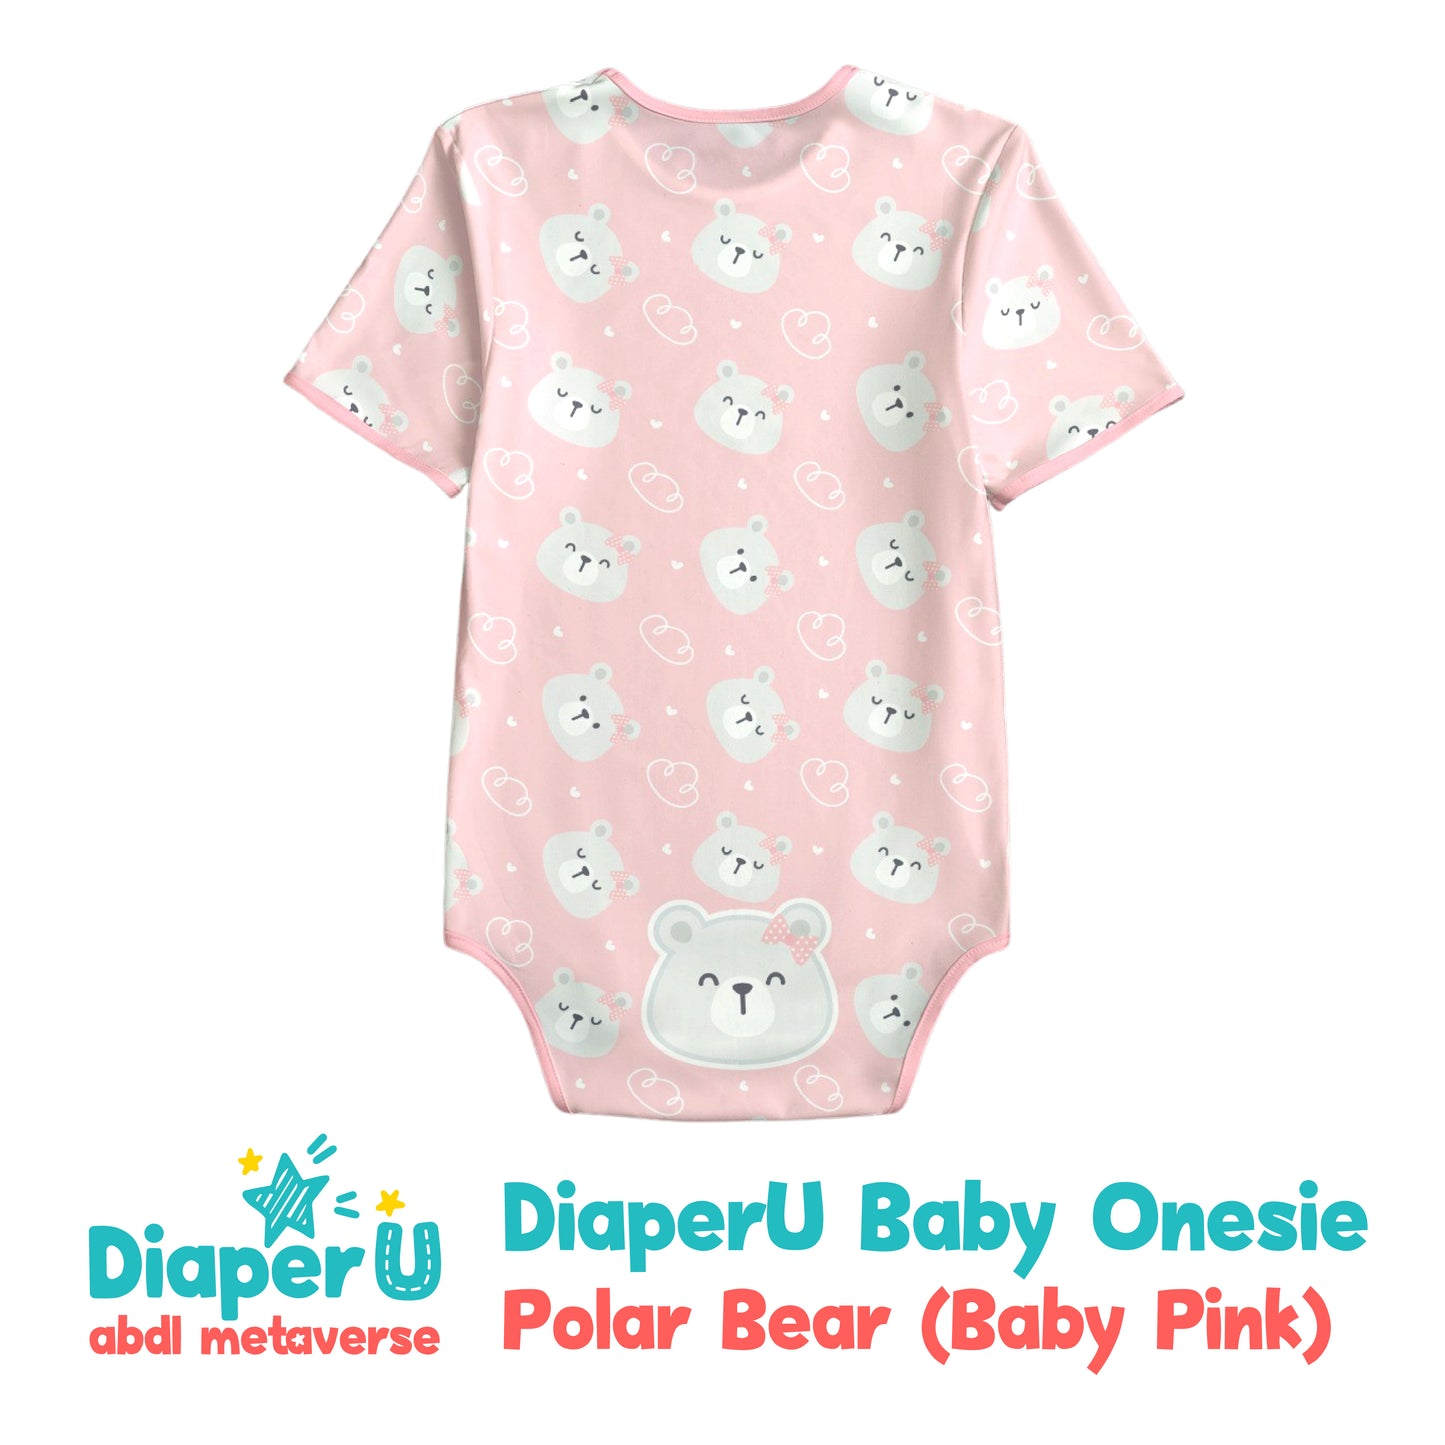 ABDL Onesie - Polar Bear (Baby Pink)